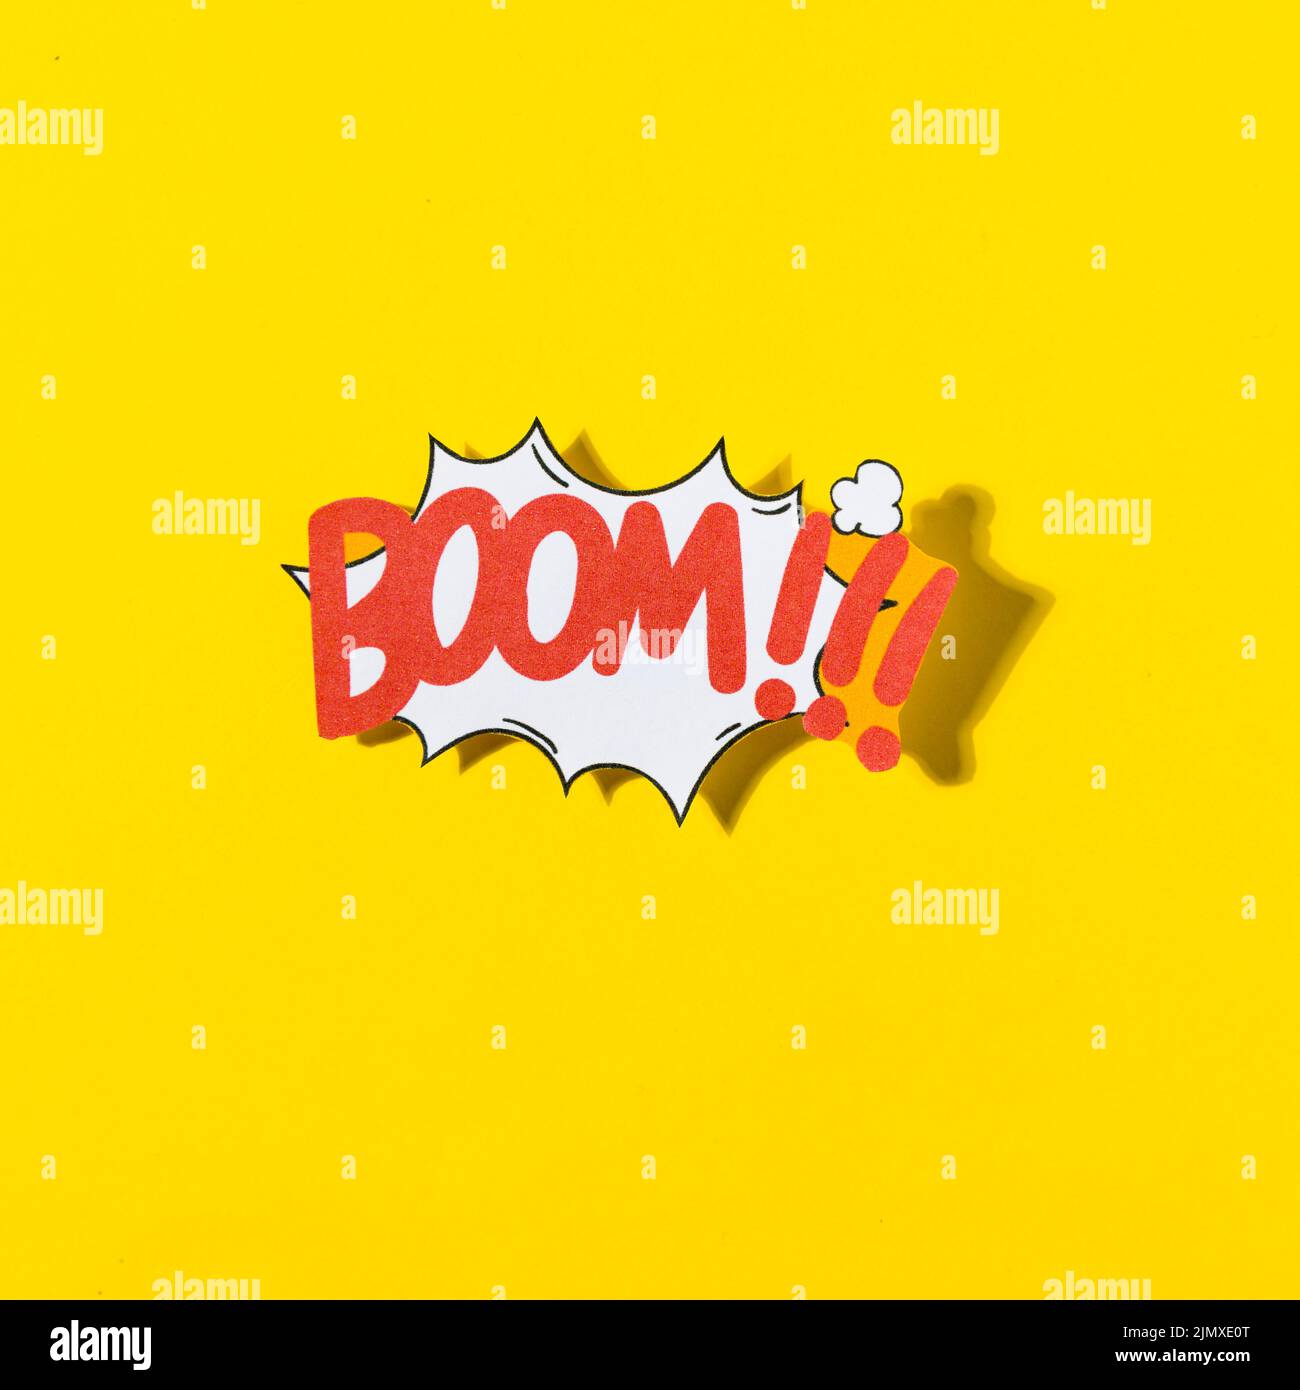 Boom cartoon illustration text retro pop art style yellow background Stock Photo